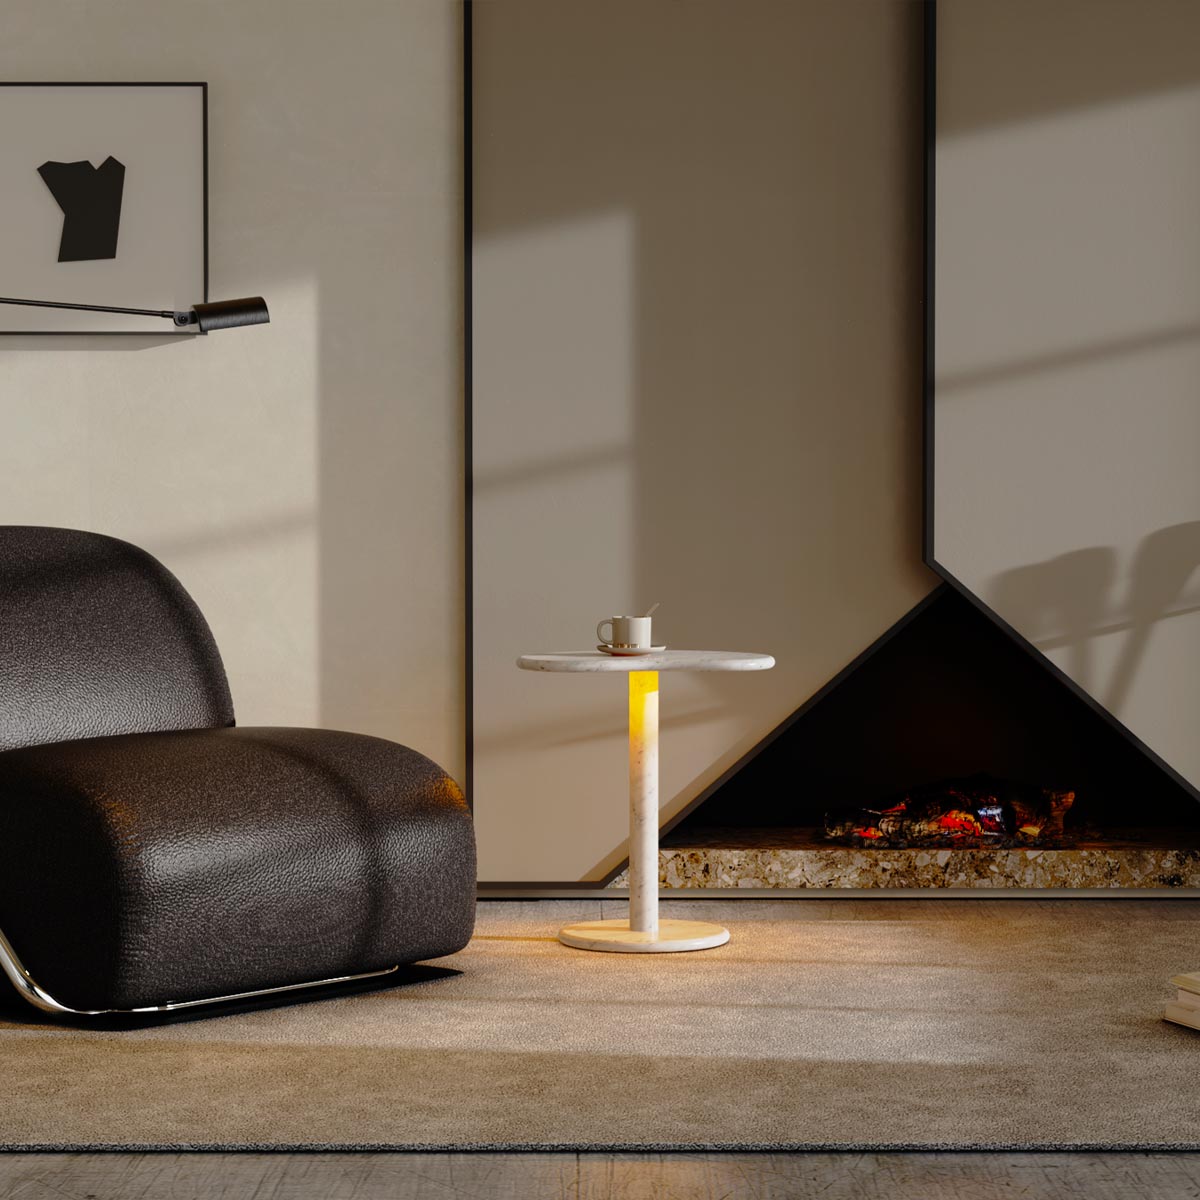 OIXDESIGN PeaPod Side Table, Italian Carrara Marble, Wireless Charging, Turn-On Night Lights, Big Macro Scene Graph, Front View